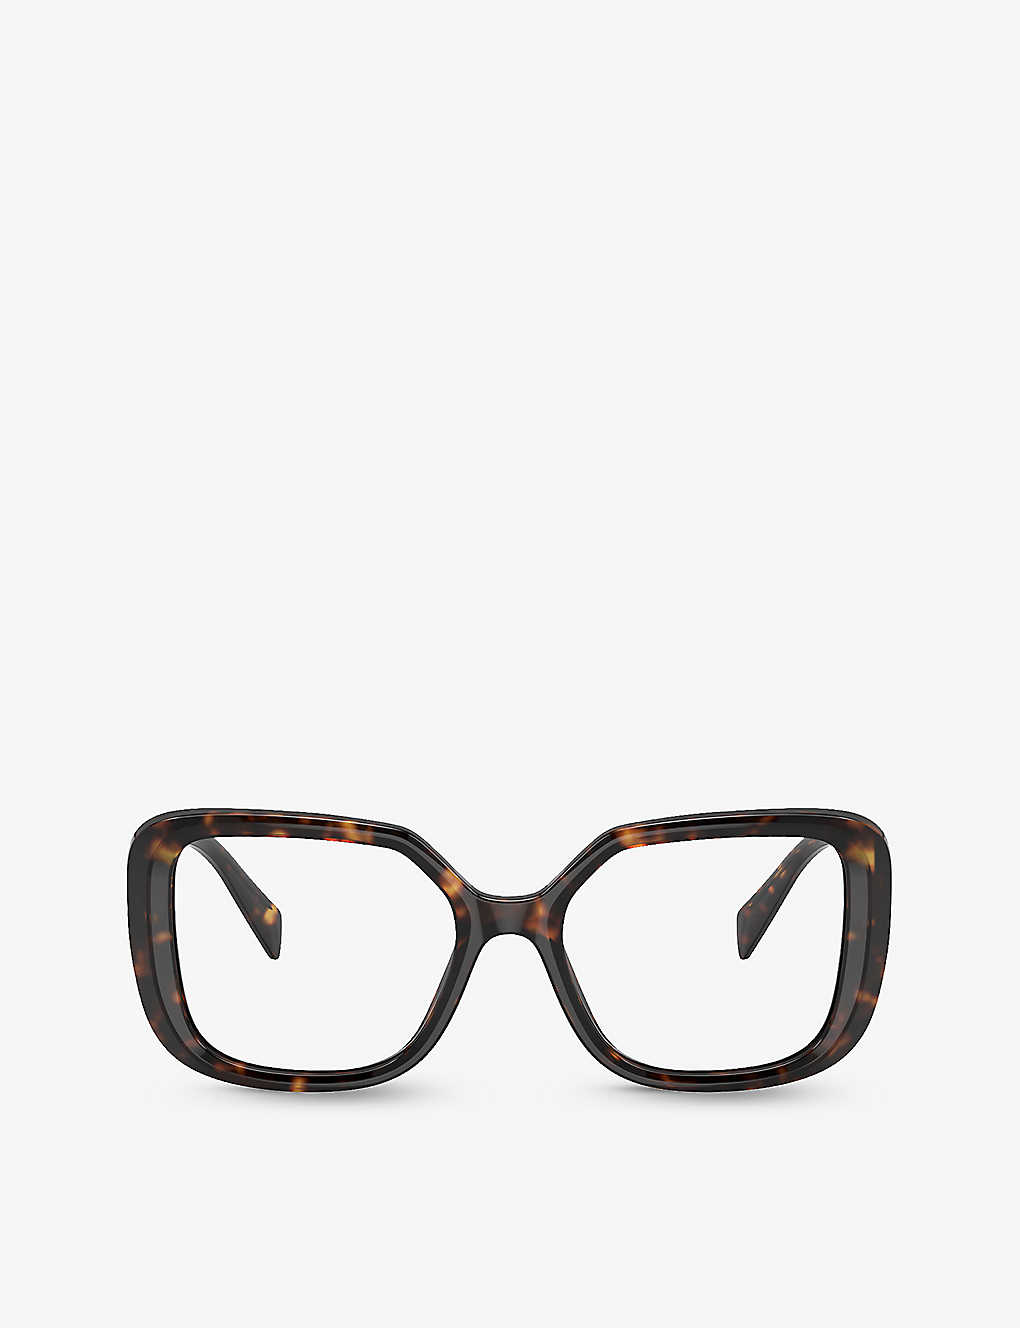 Prada Tortoiseshell Square Glasses In Brown